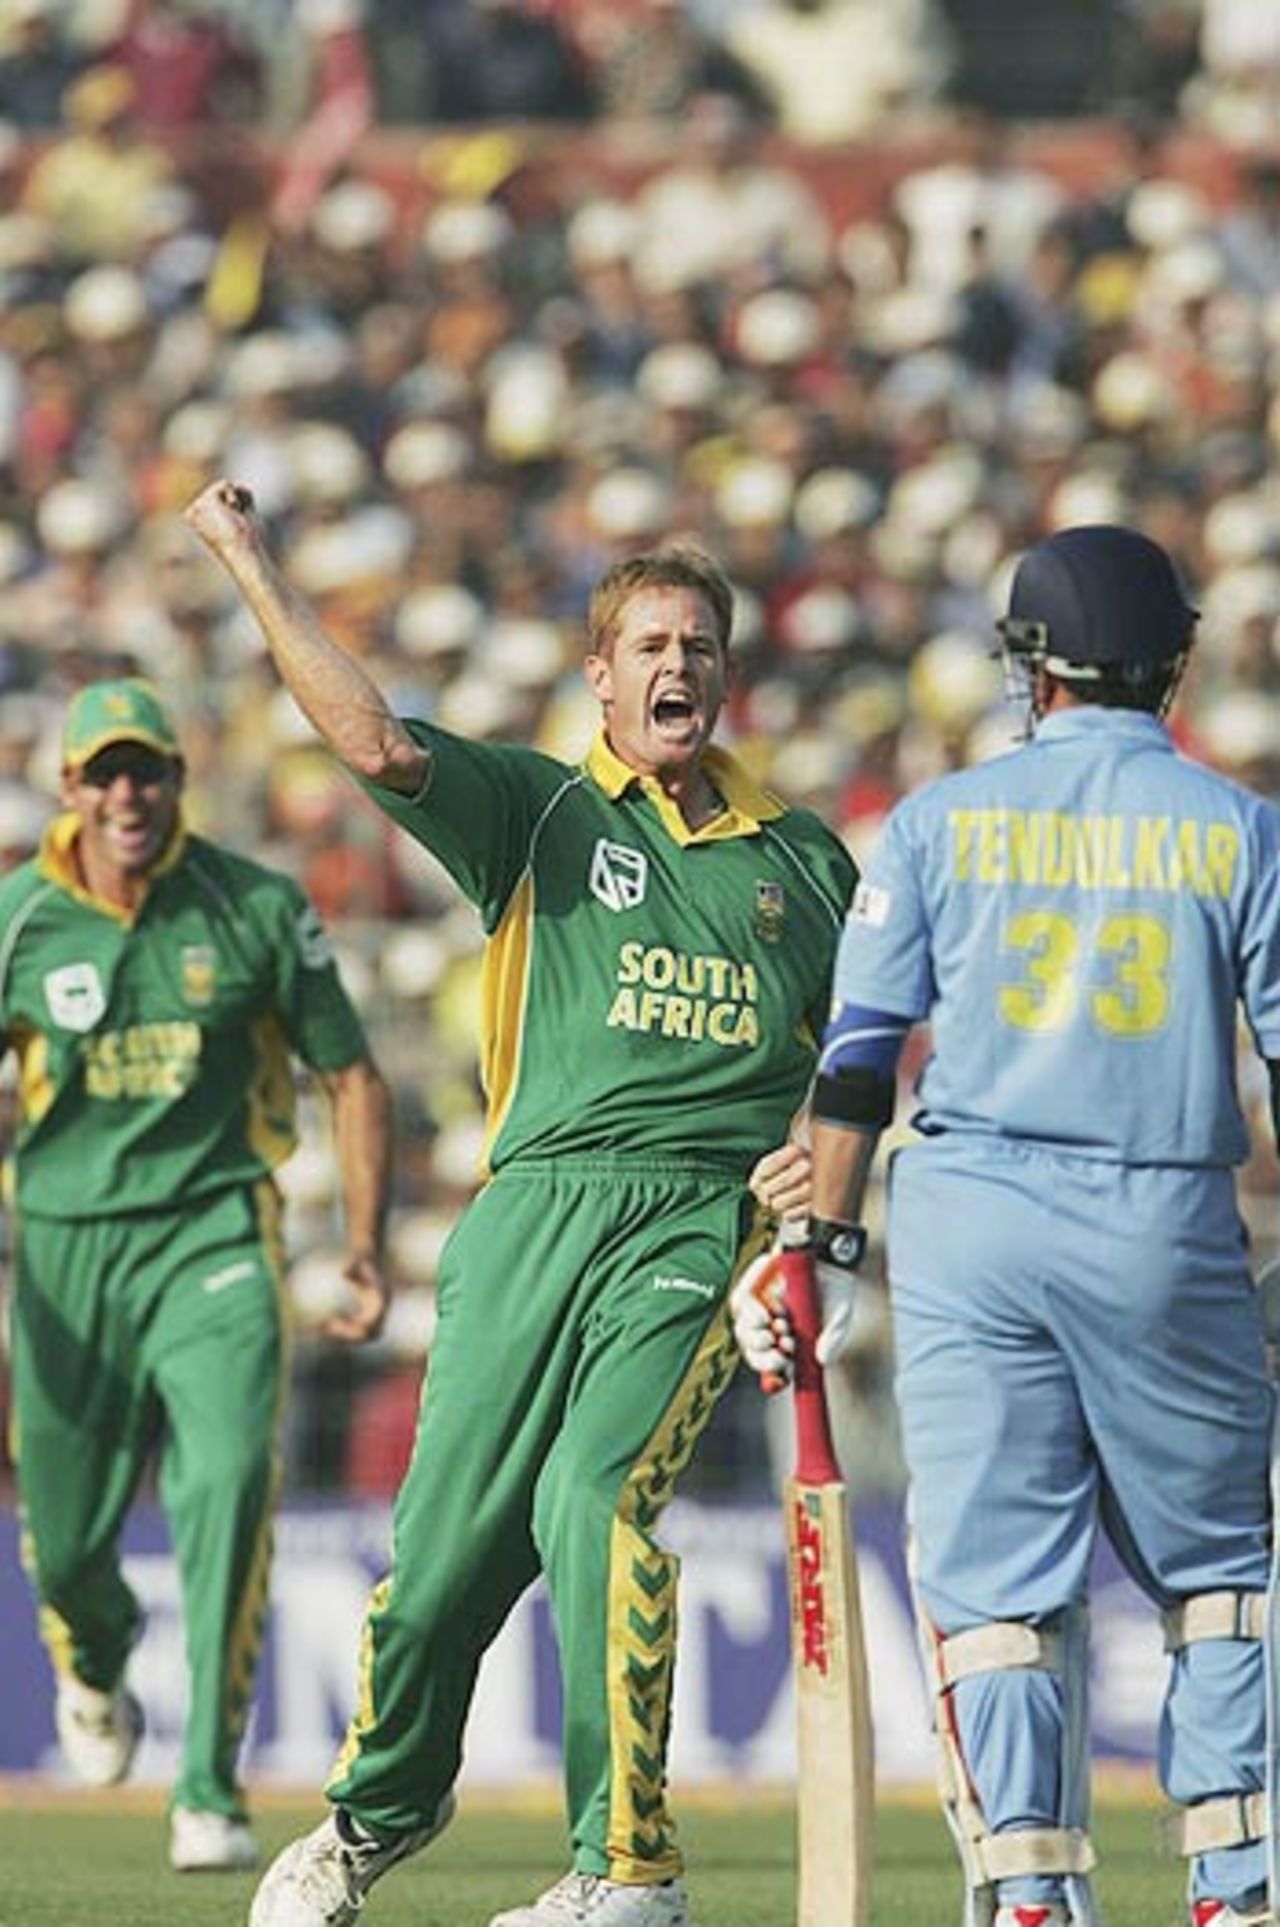 Shaun Pollock celebrates the wicket of Sachin Tendulkar, India v South Africa, 4th ODI, Kolkata, November 25, 2005